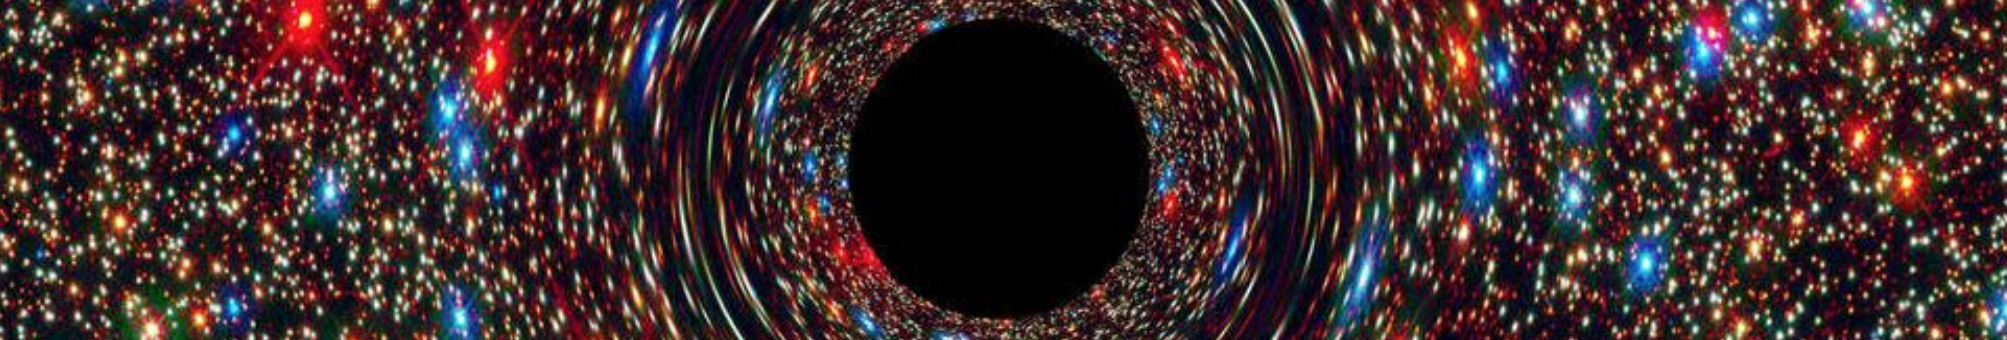 image of coloured blurred black hole